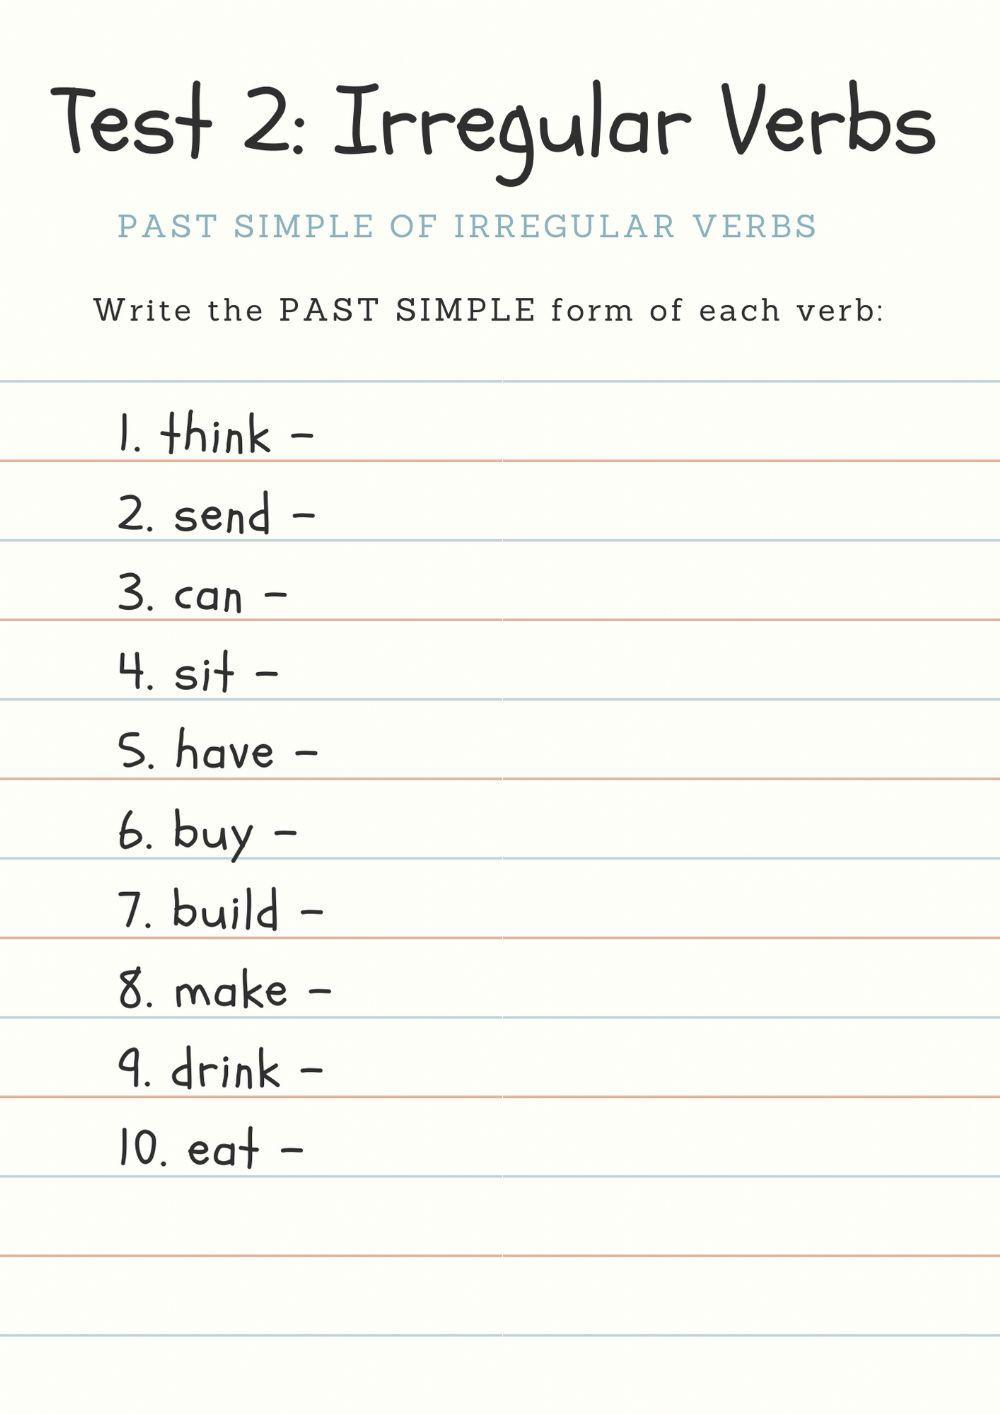 Irregular Verb Past Simple Test (2)